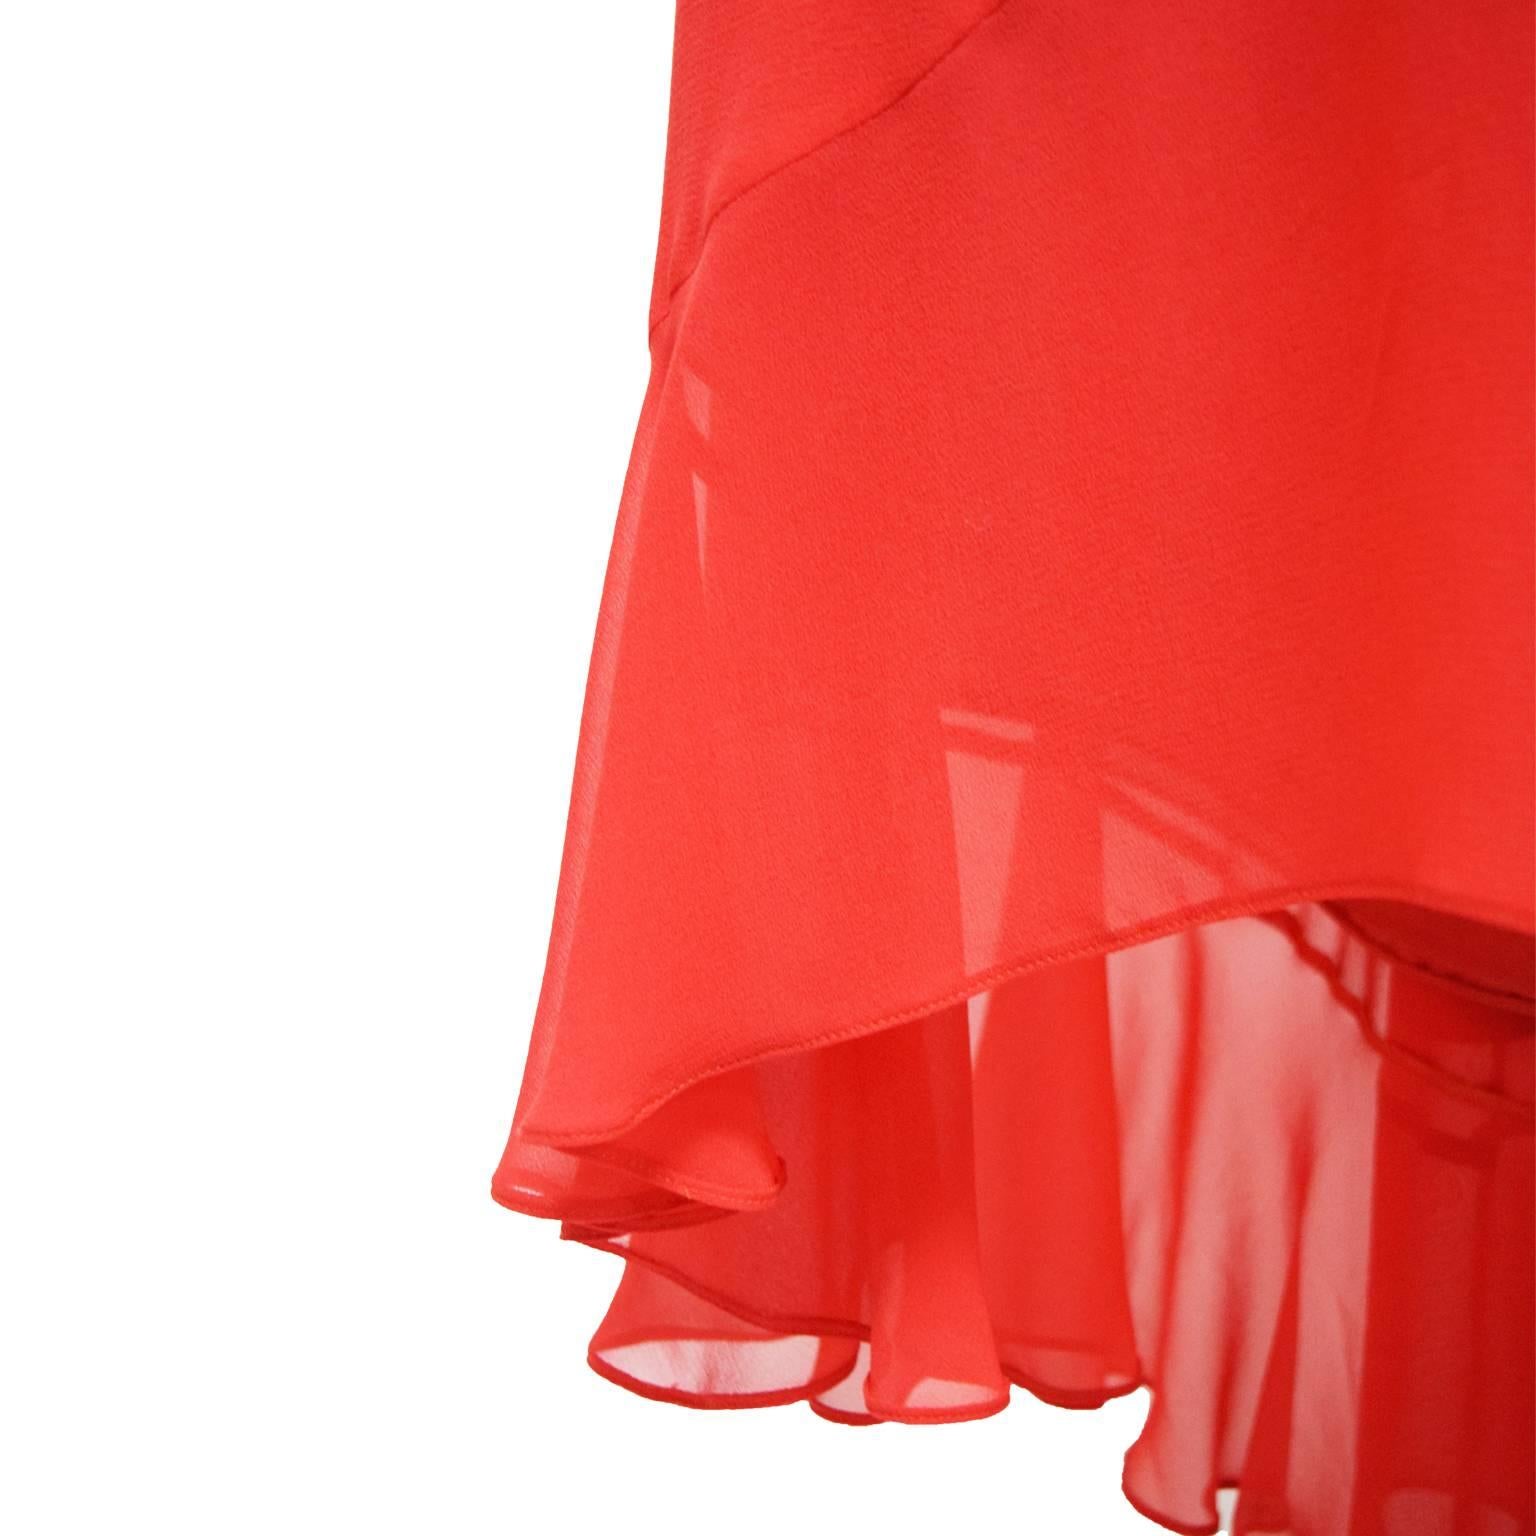 Giorgio Armani Red Sheer Sheath Dress In Excellent Condition For Sale In Henrico, VA